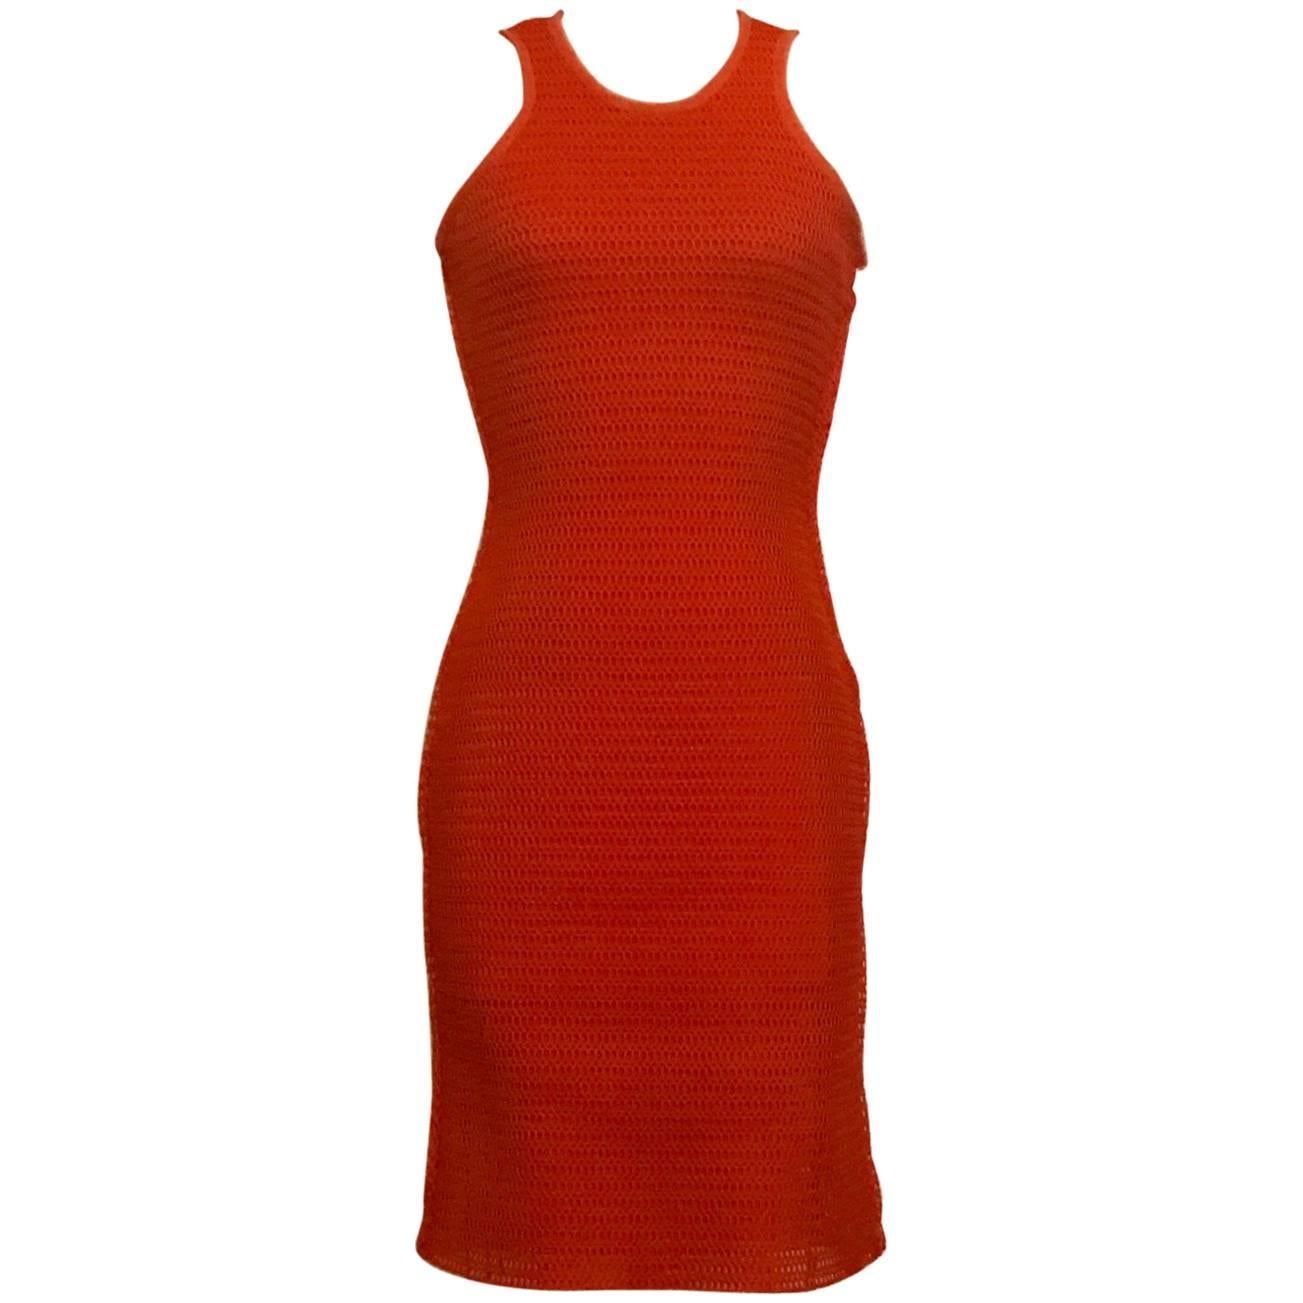 Lanvin Red Orange Knit Mesh Body Con Dress with Raw Chiffon Trim, 2013 